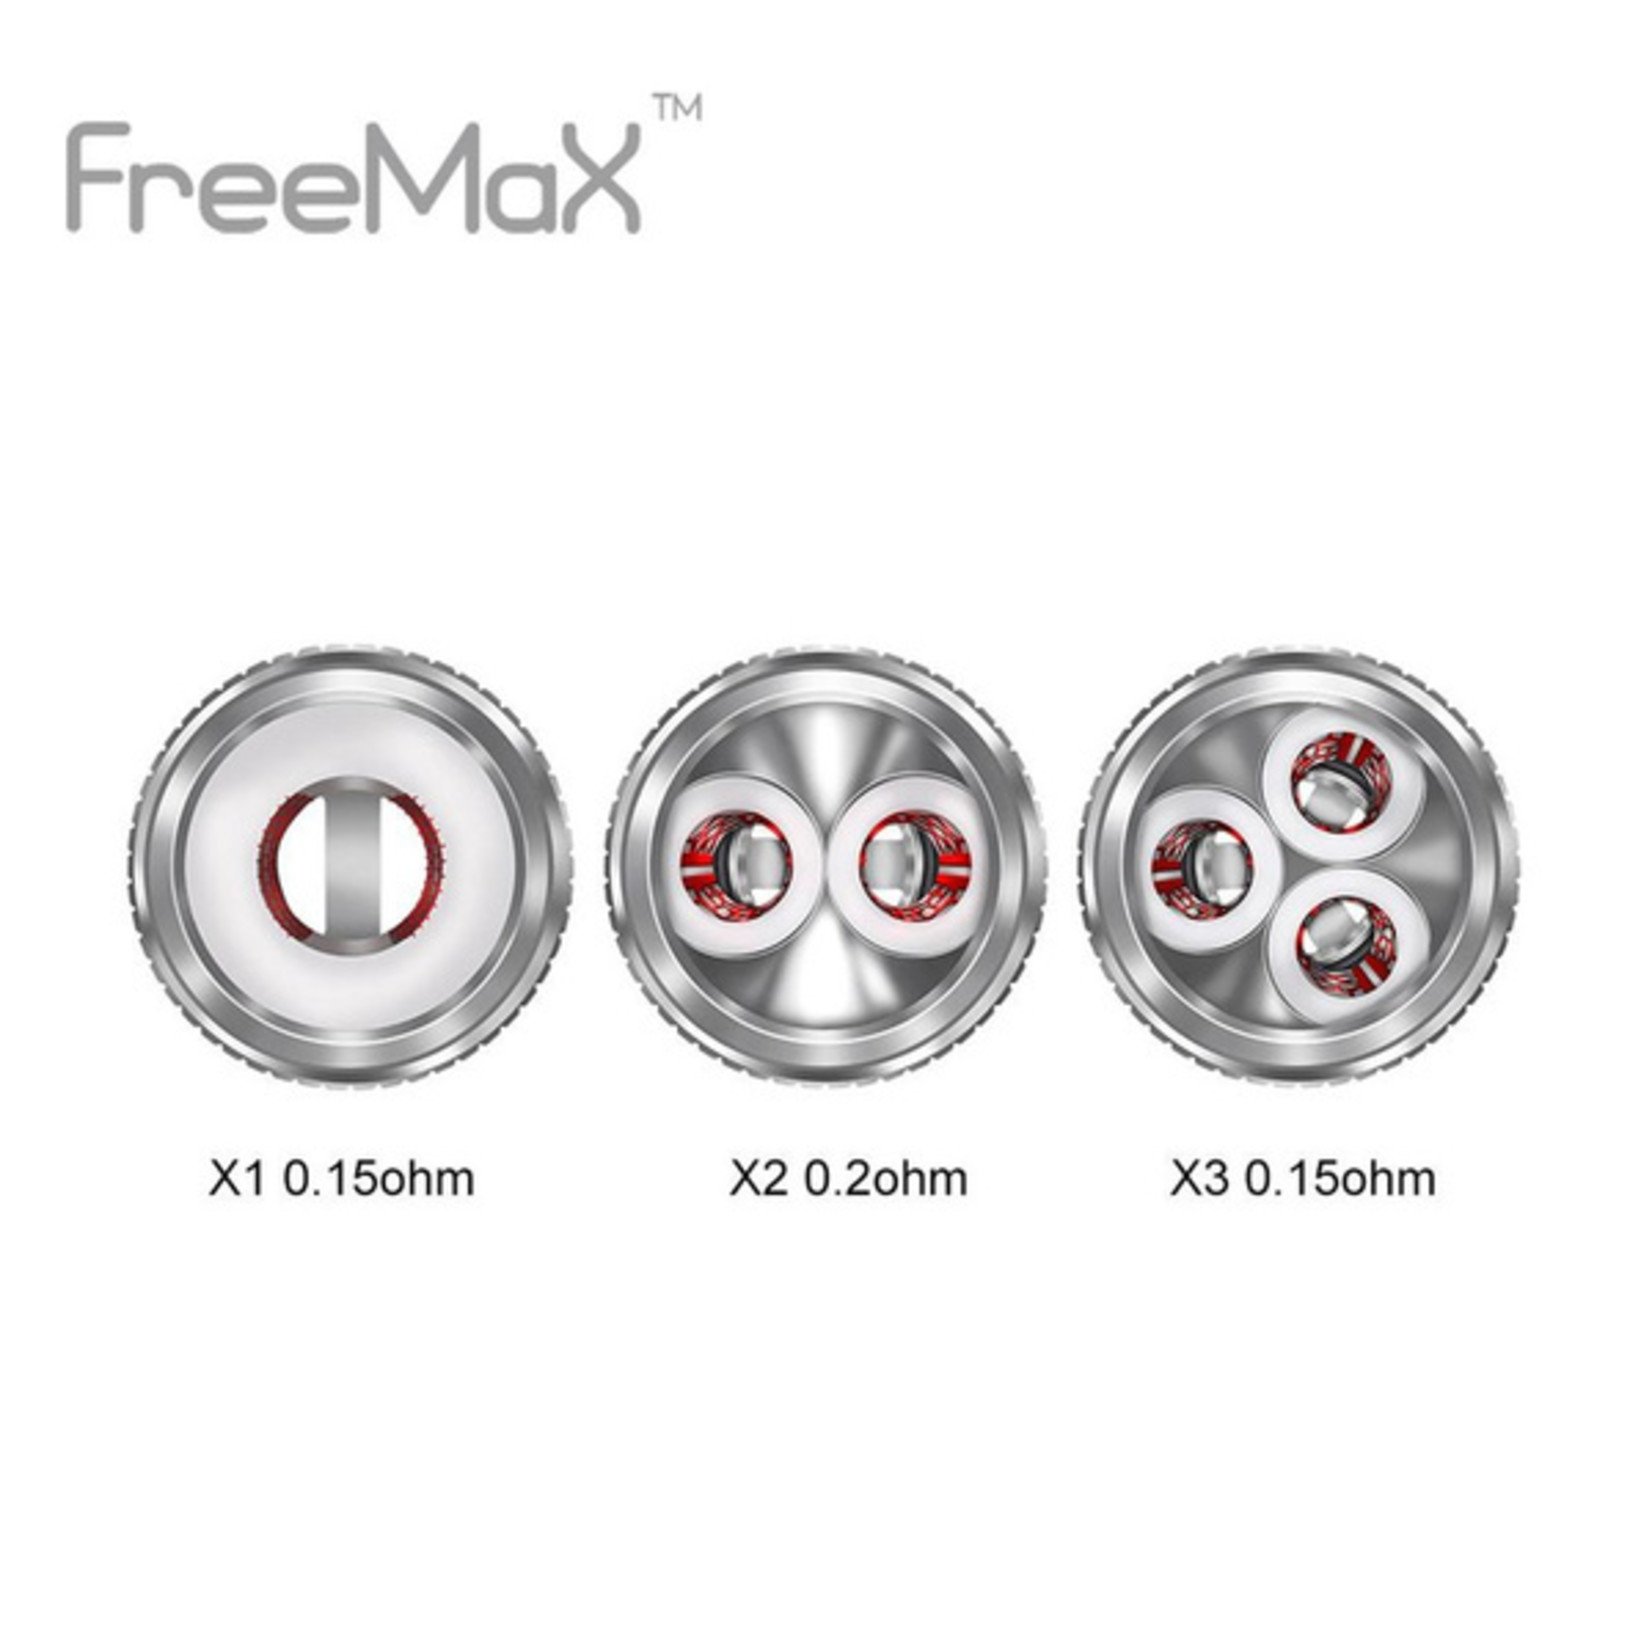 FreeMax Freemax Mesh Coils